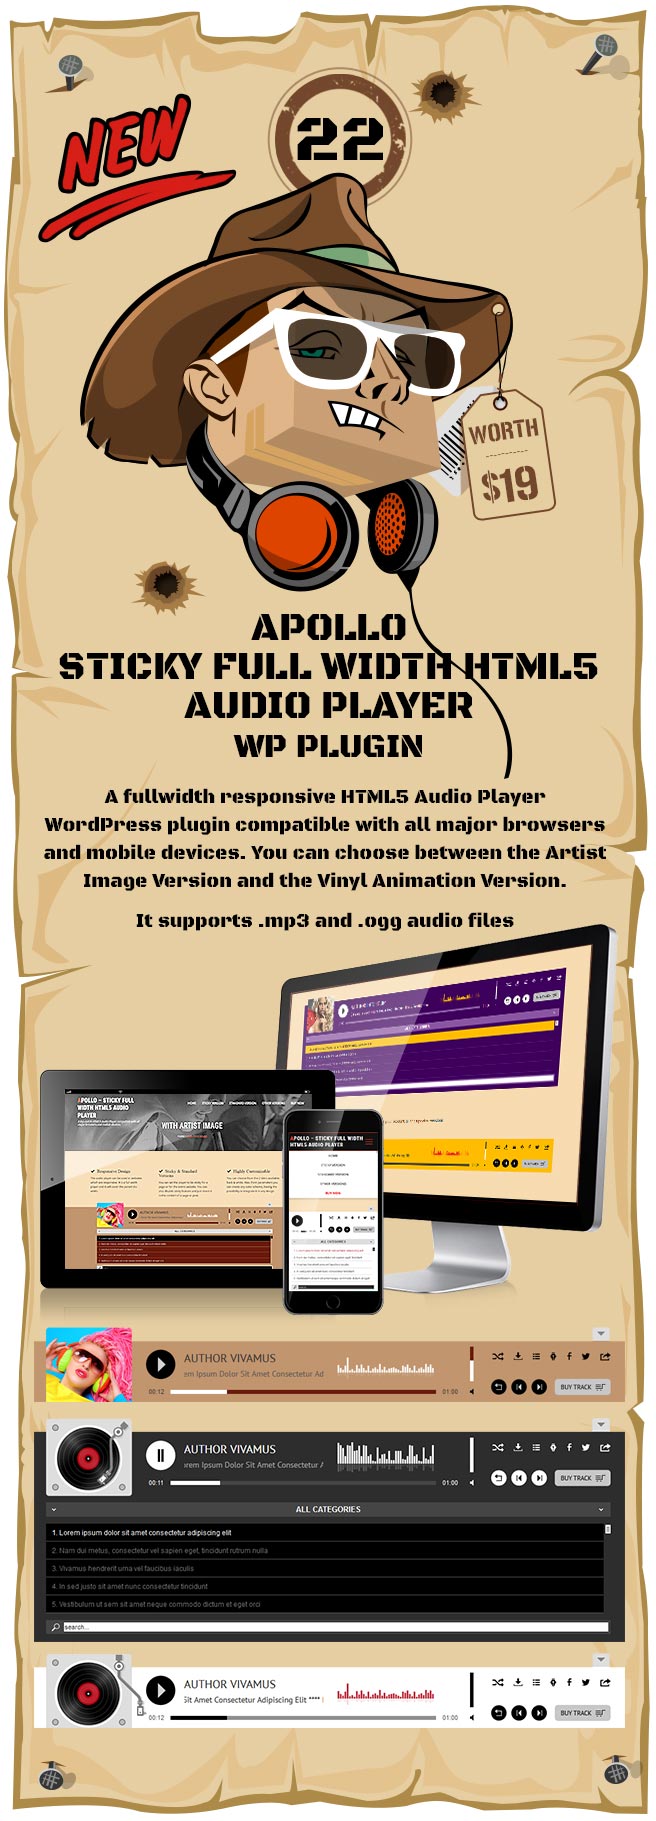 Apollo - Sticky Full Width HTML5 Audio Player - WordPress Plugin